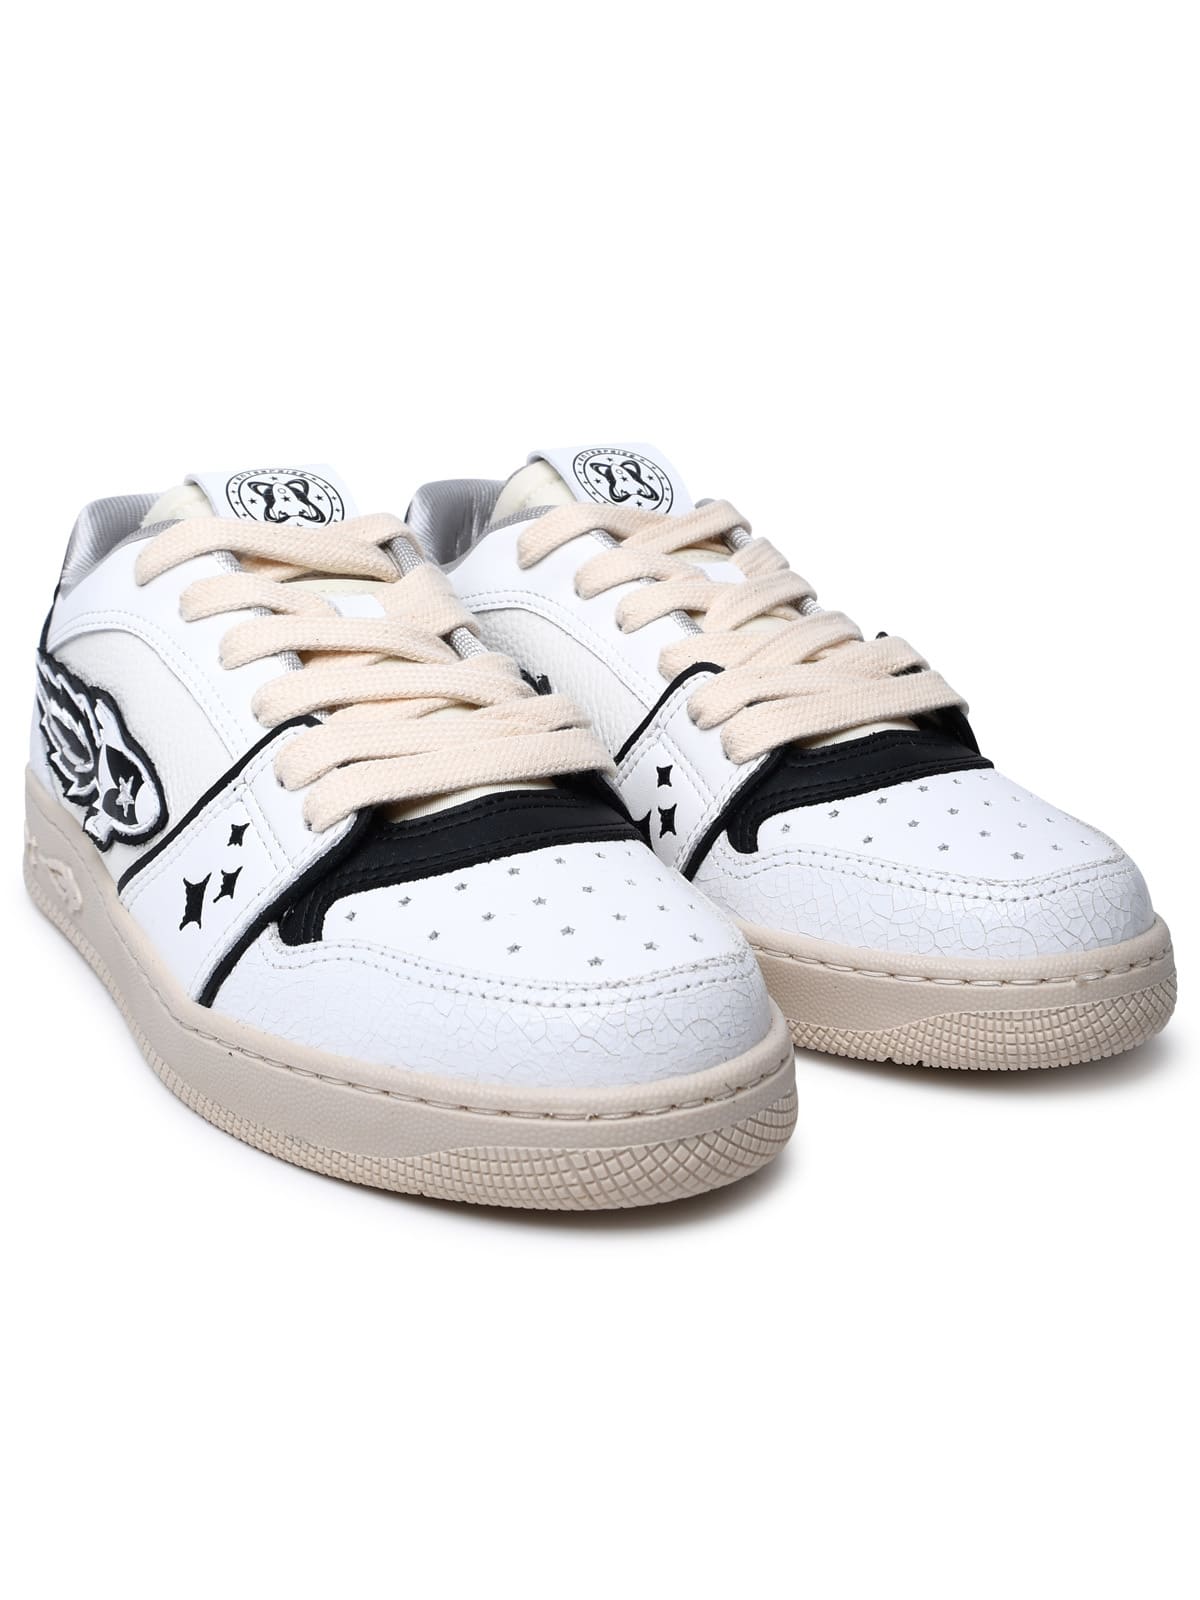 Shop Enterprise Japan White Leather Sneakers